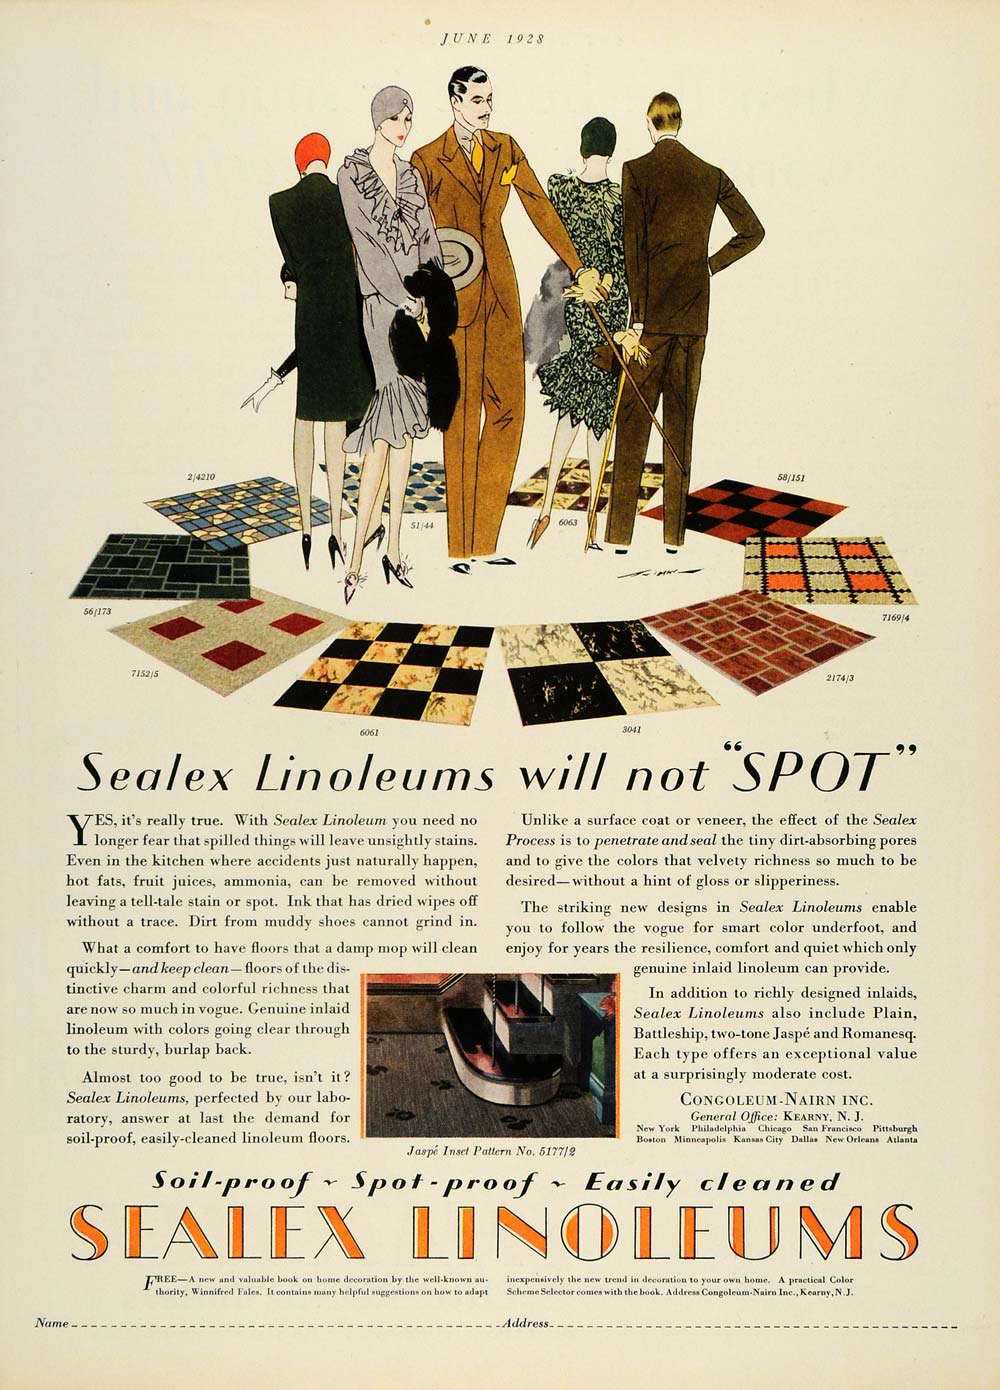 1928 Ad Sealex Linoleums Floors Jaspe Inset Pattern No 5177 Congoleum Nairn HB2